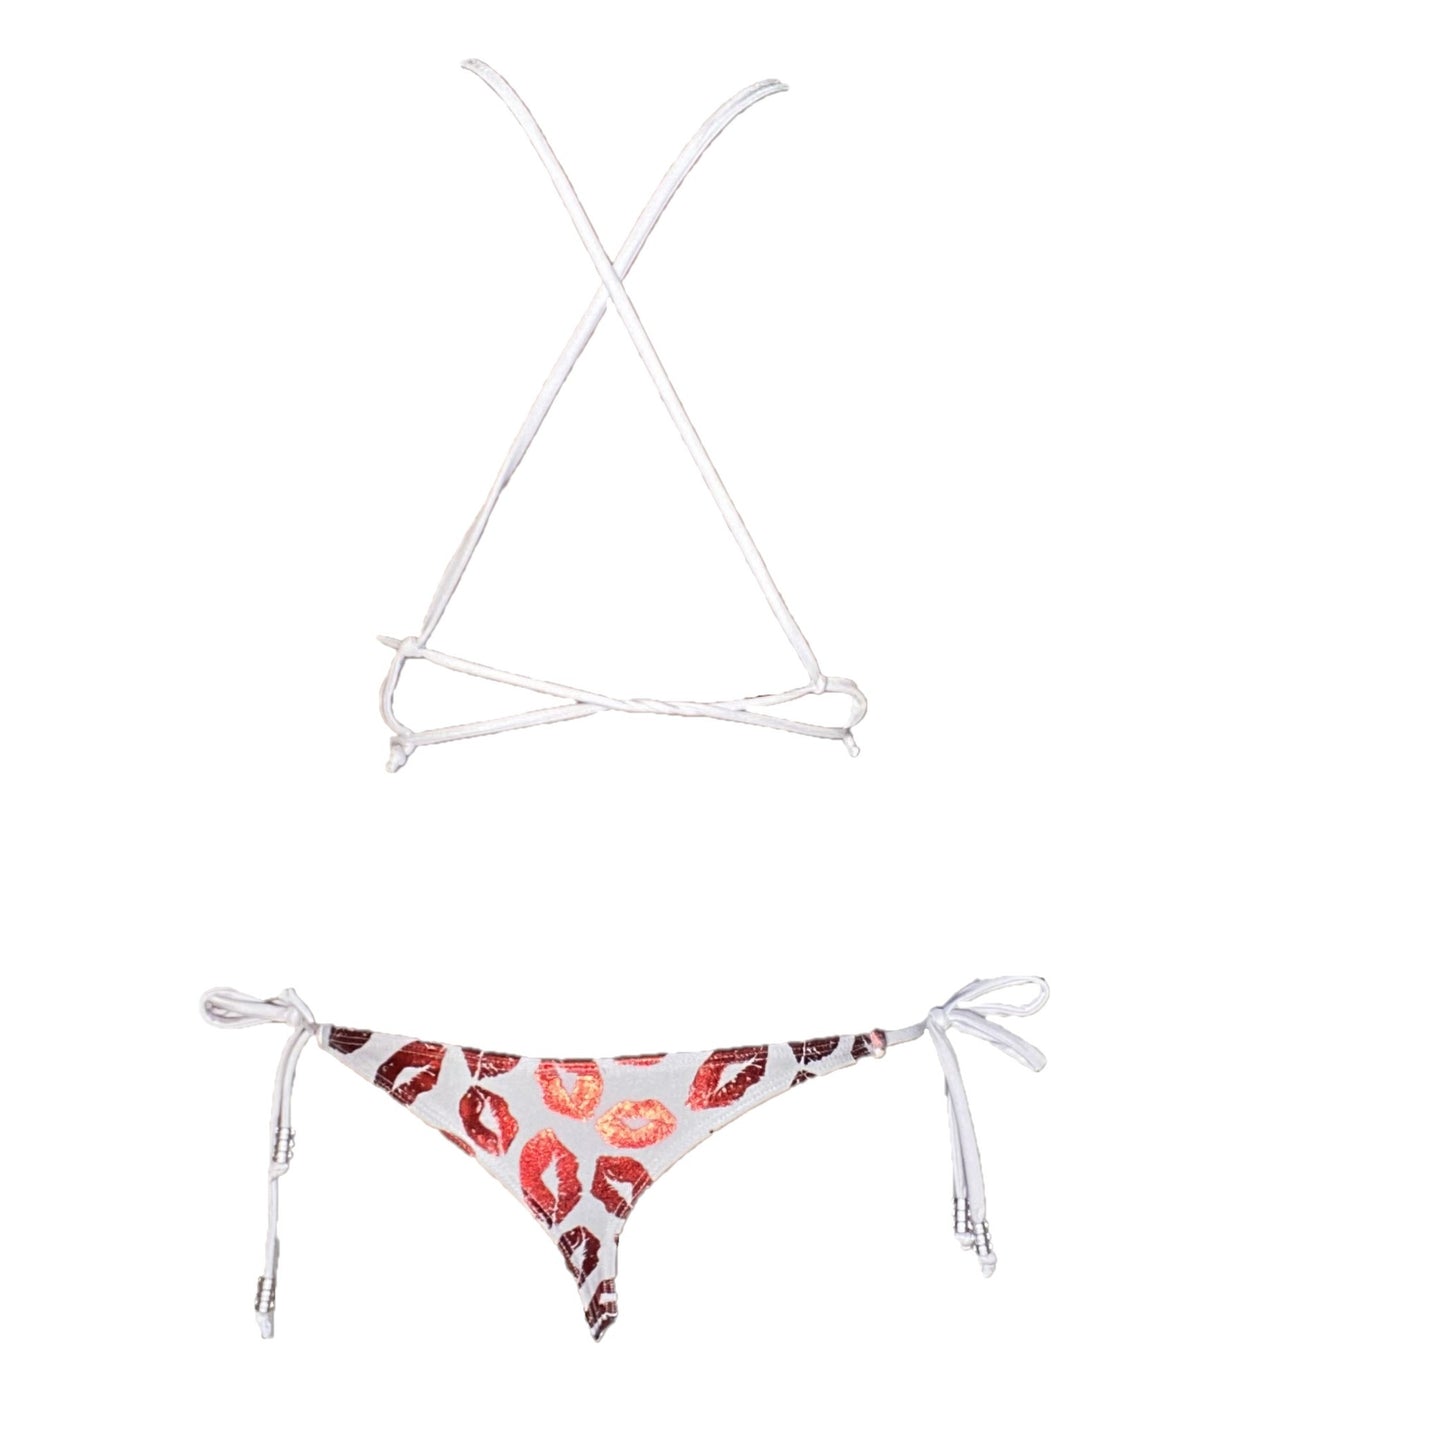 Soninha Triangle Bikini Top - Kisses Print